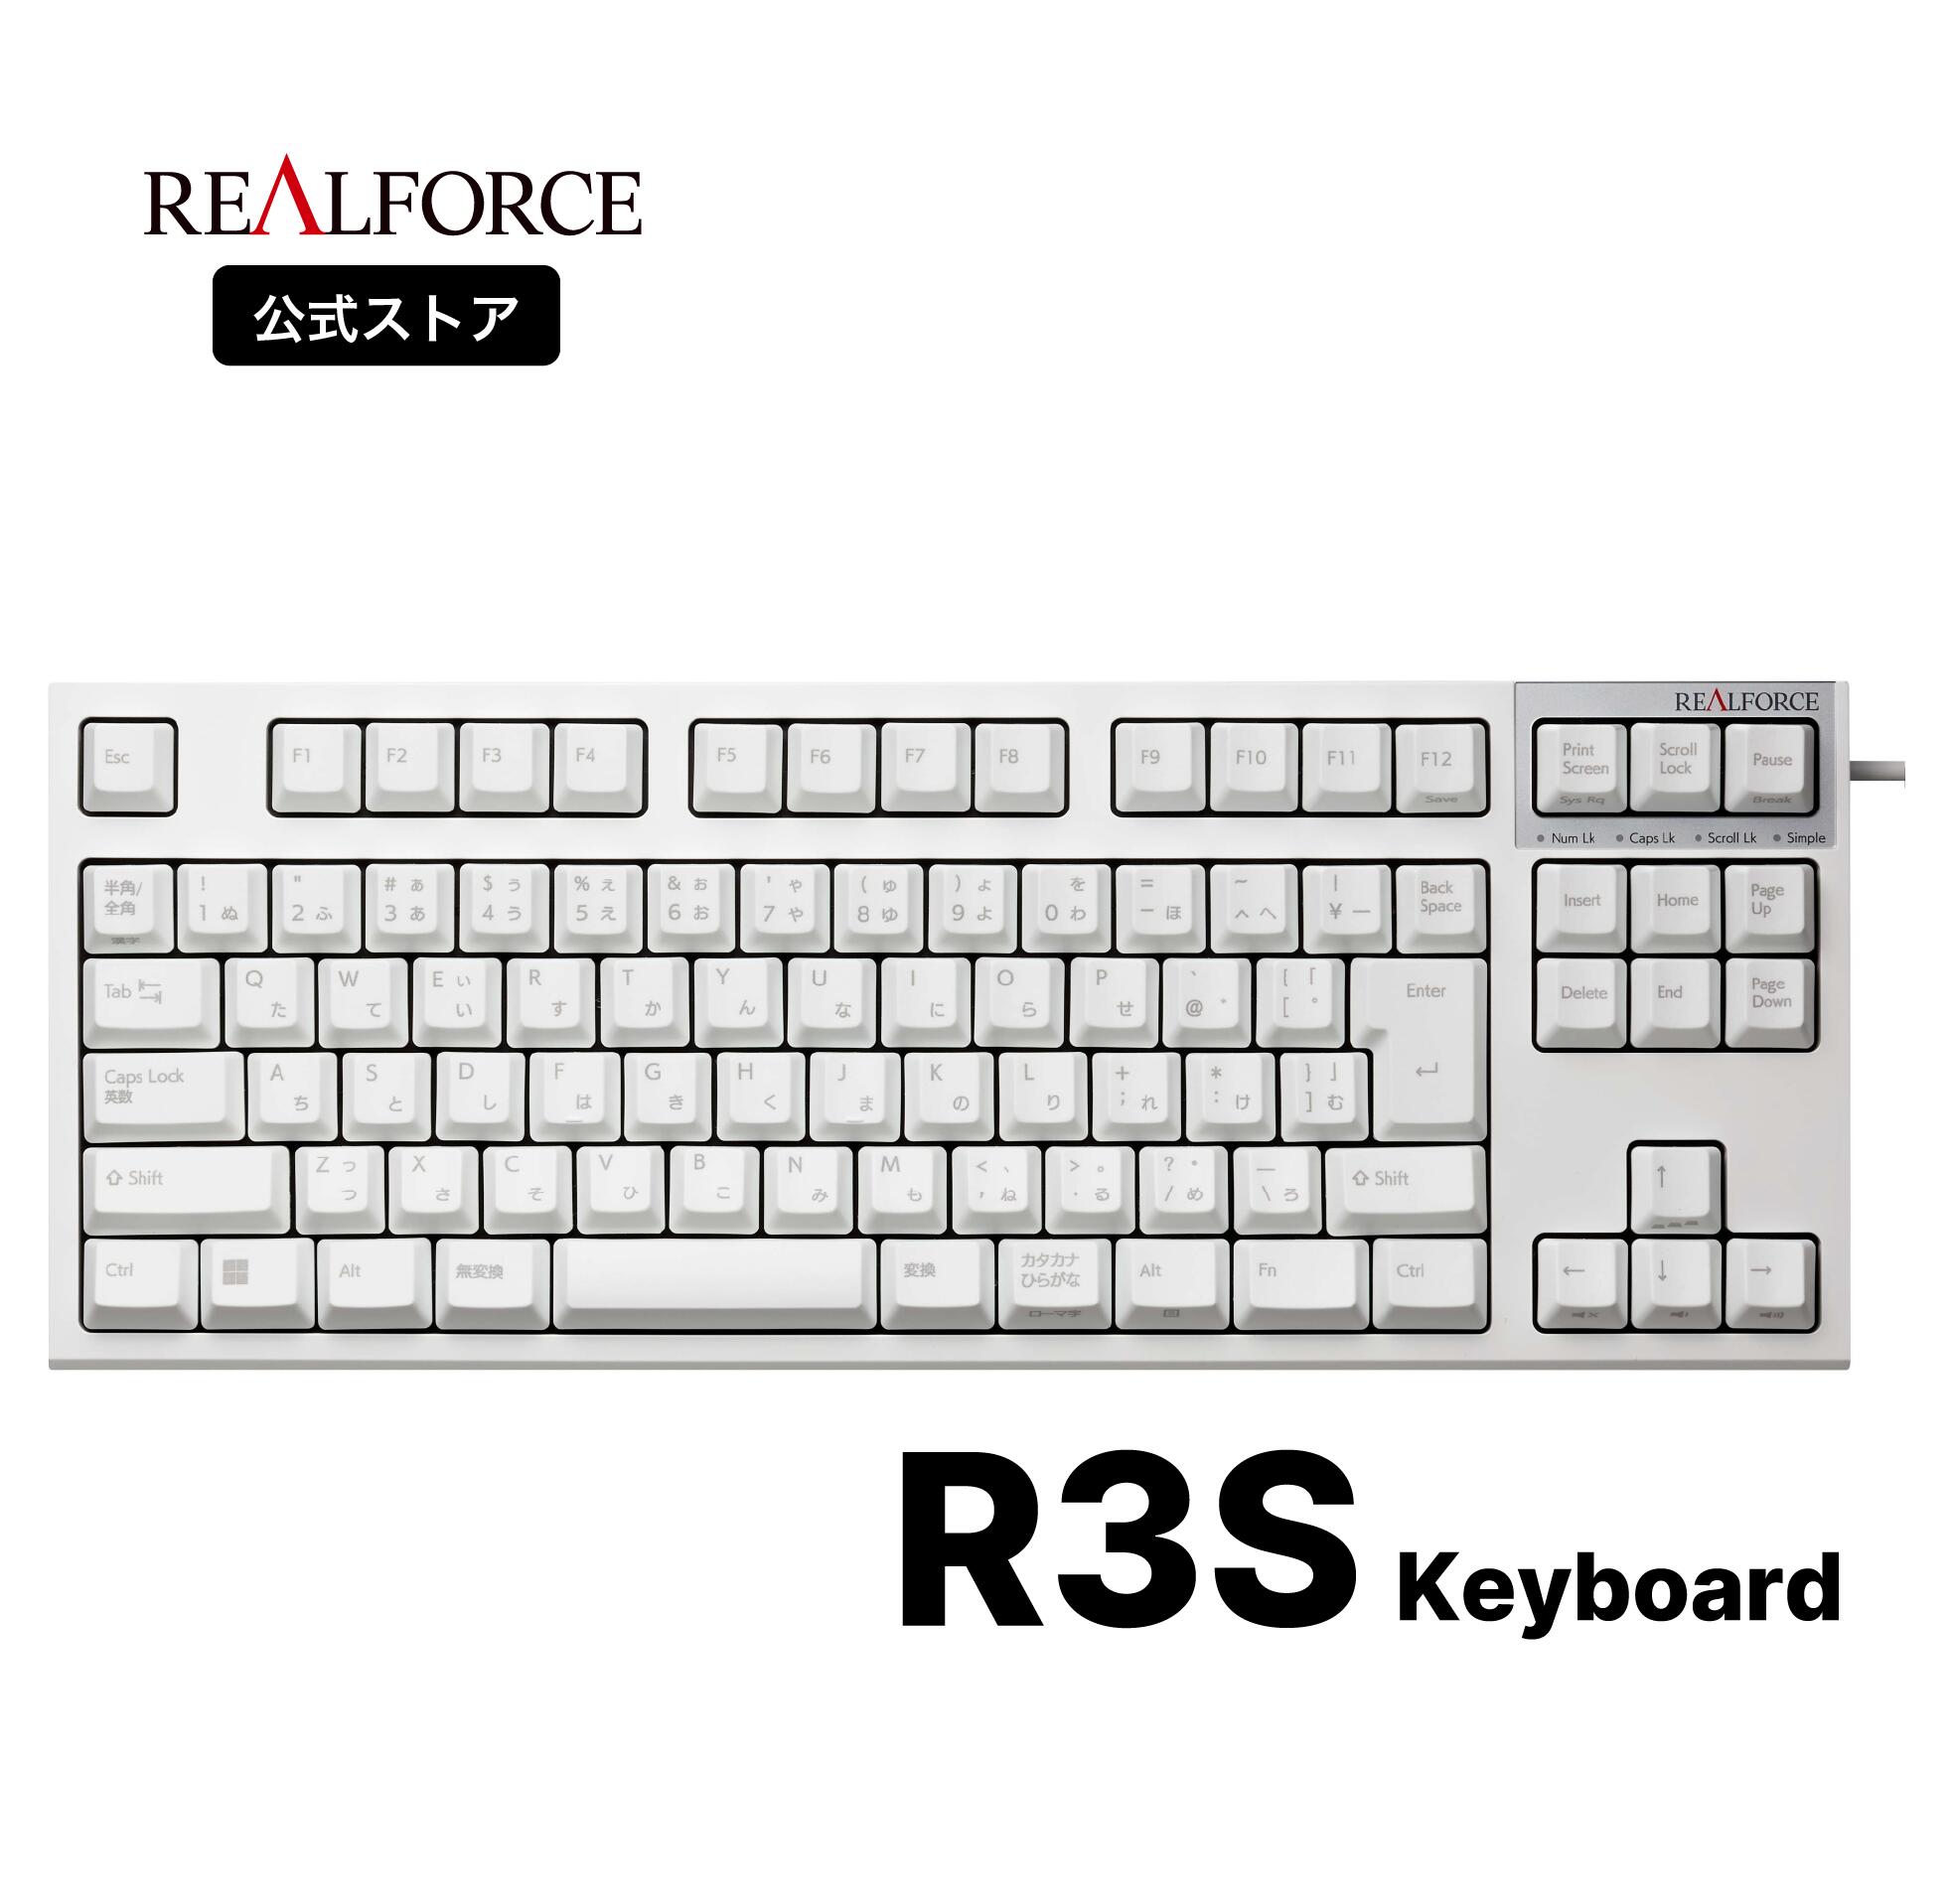  REALFORCE R3S キーボード 日本語配列 ホワイト フルキーボード テンキーレス 標準スイッチ 静音スイッチ 45g USB レーザー印刷 有線 東プレ リアルフォース